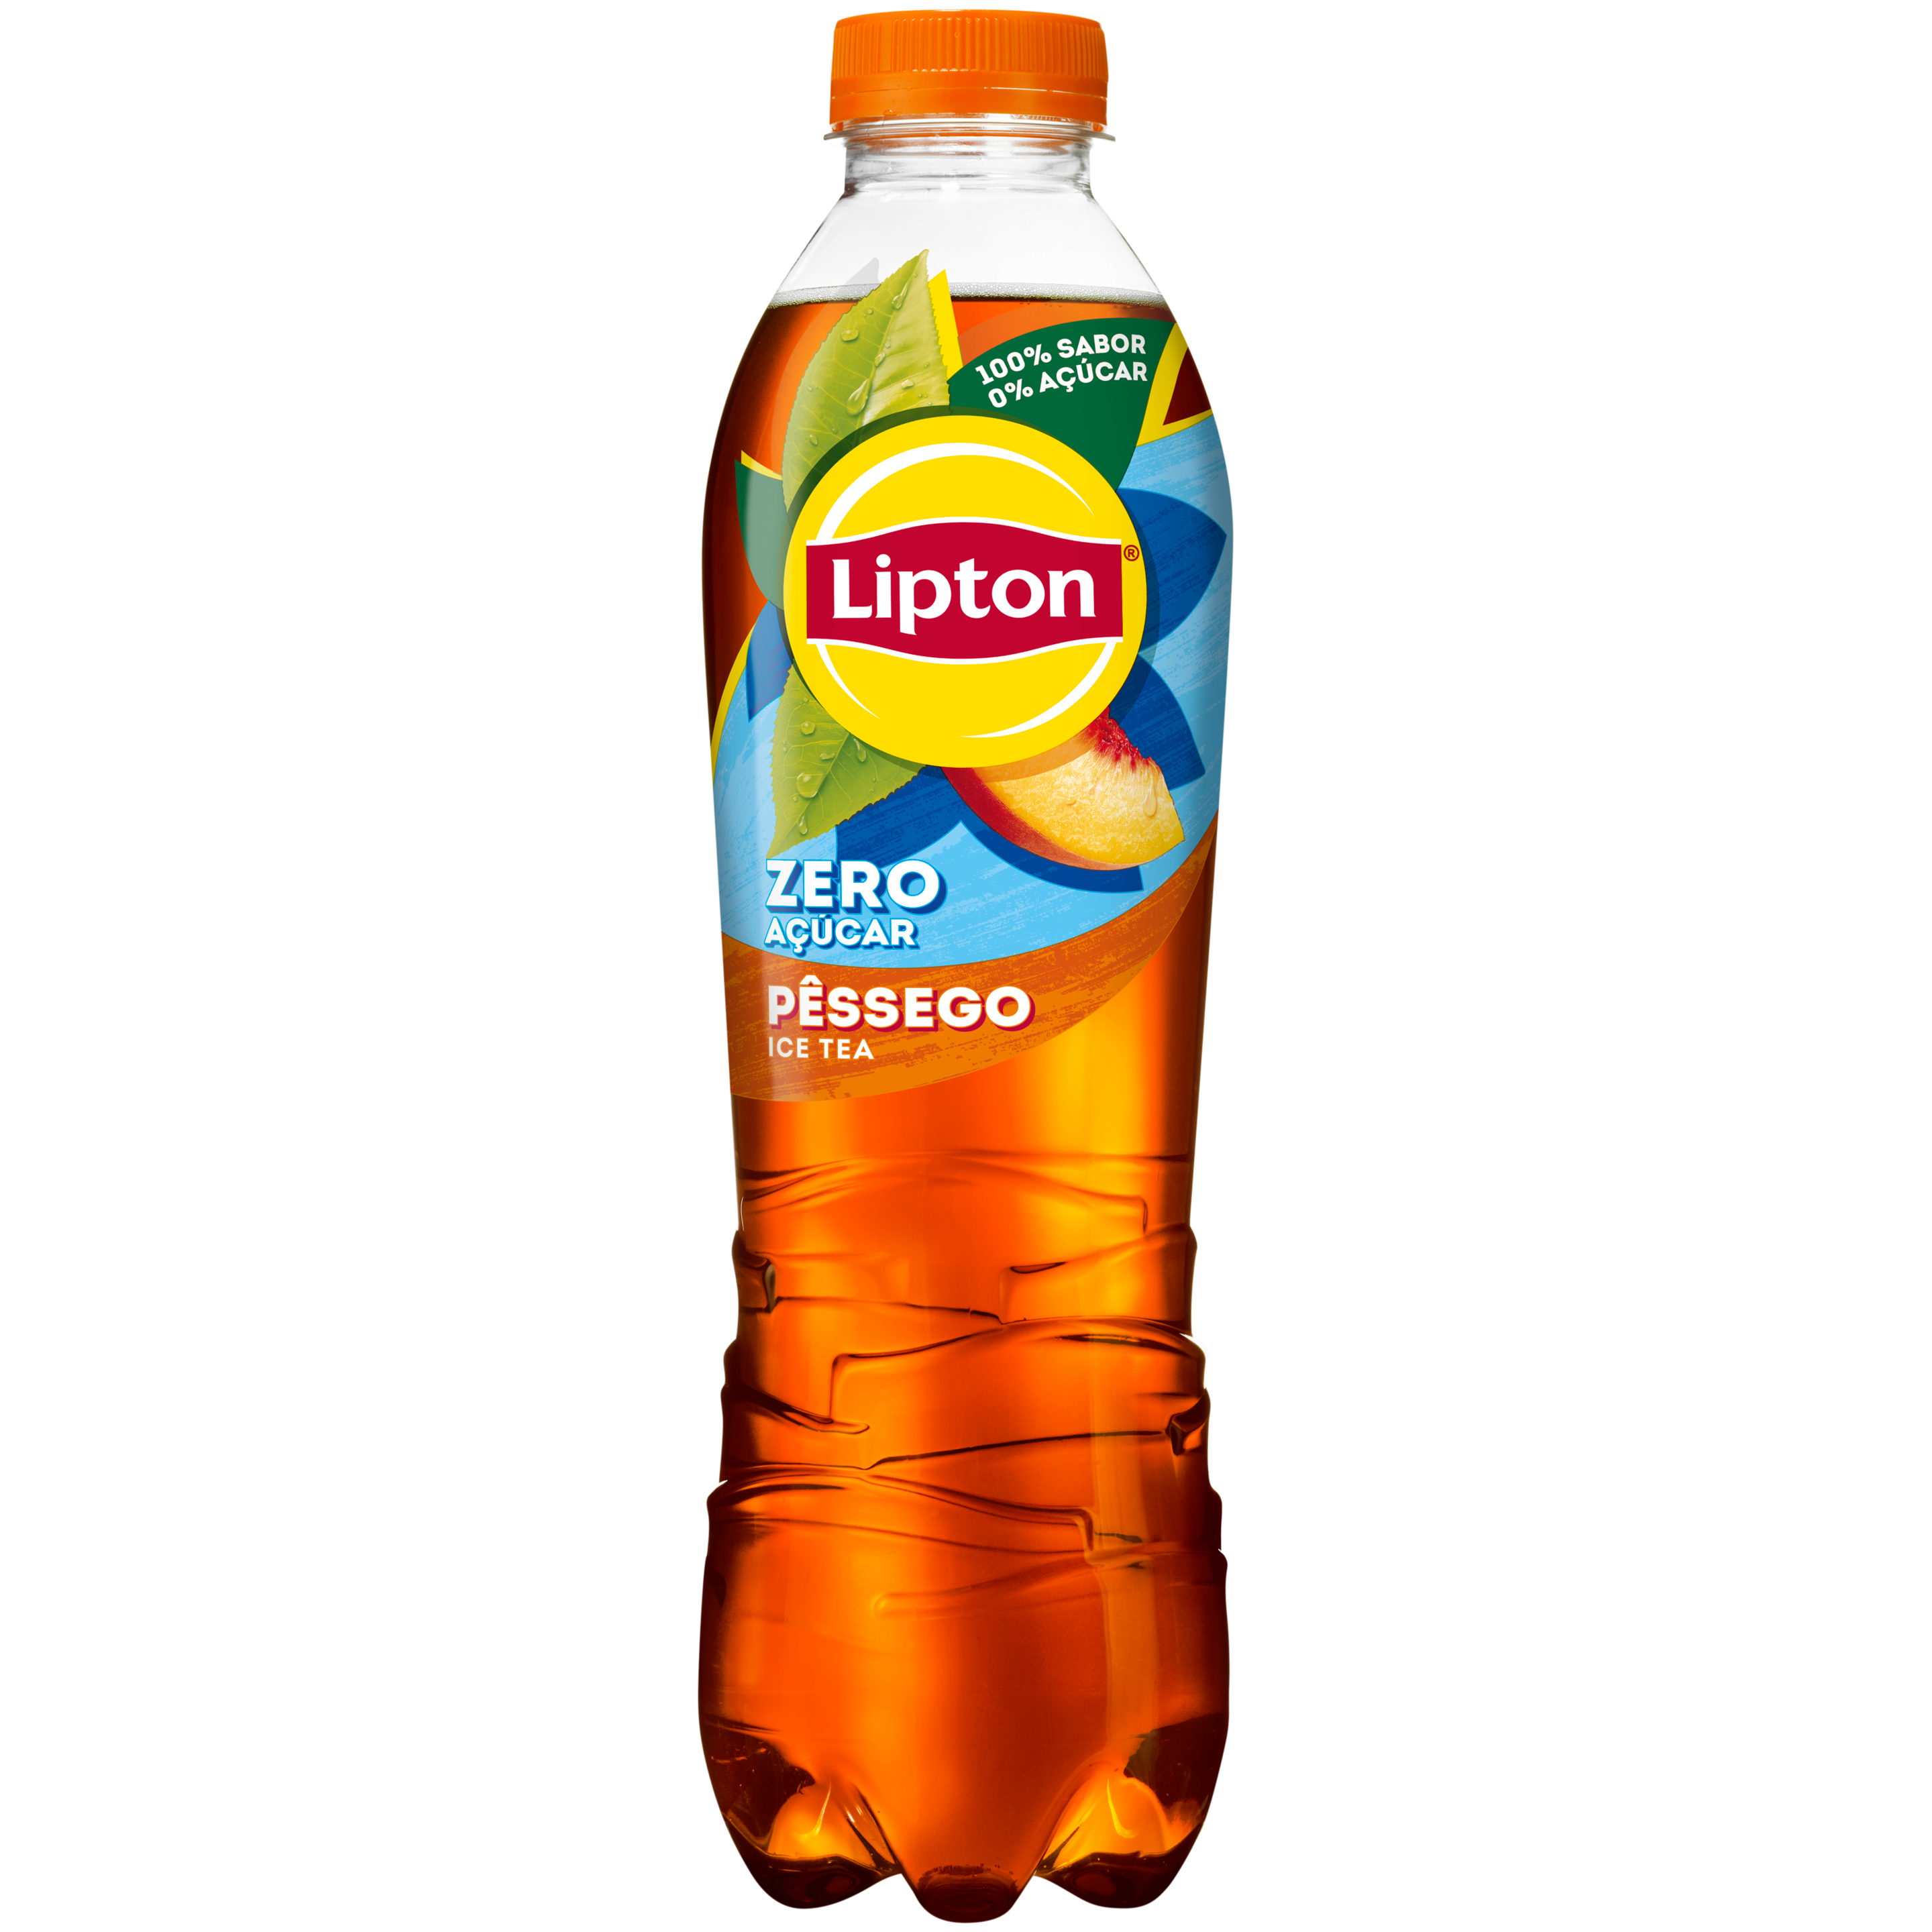 Lipton Ie Tea Pêssego Zero Açúcar 1L packshot